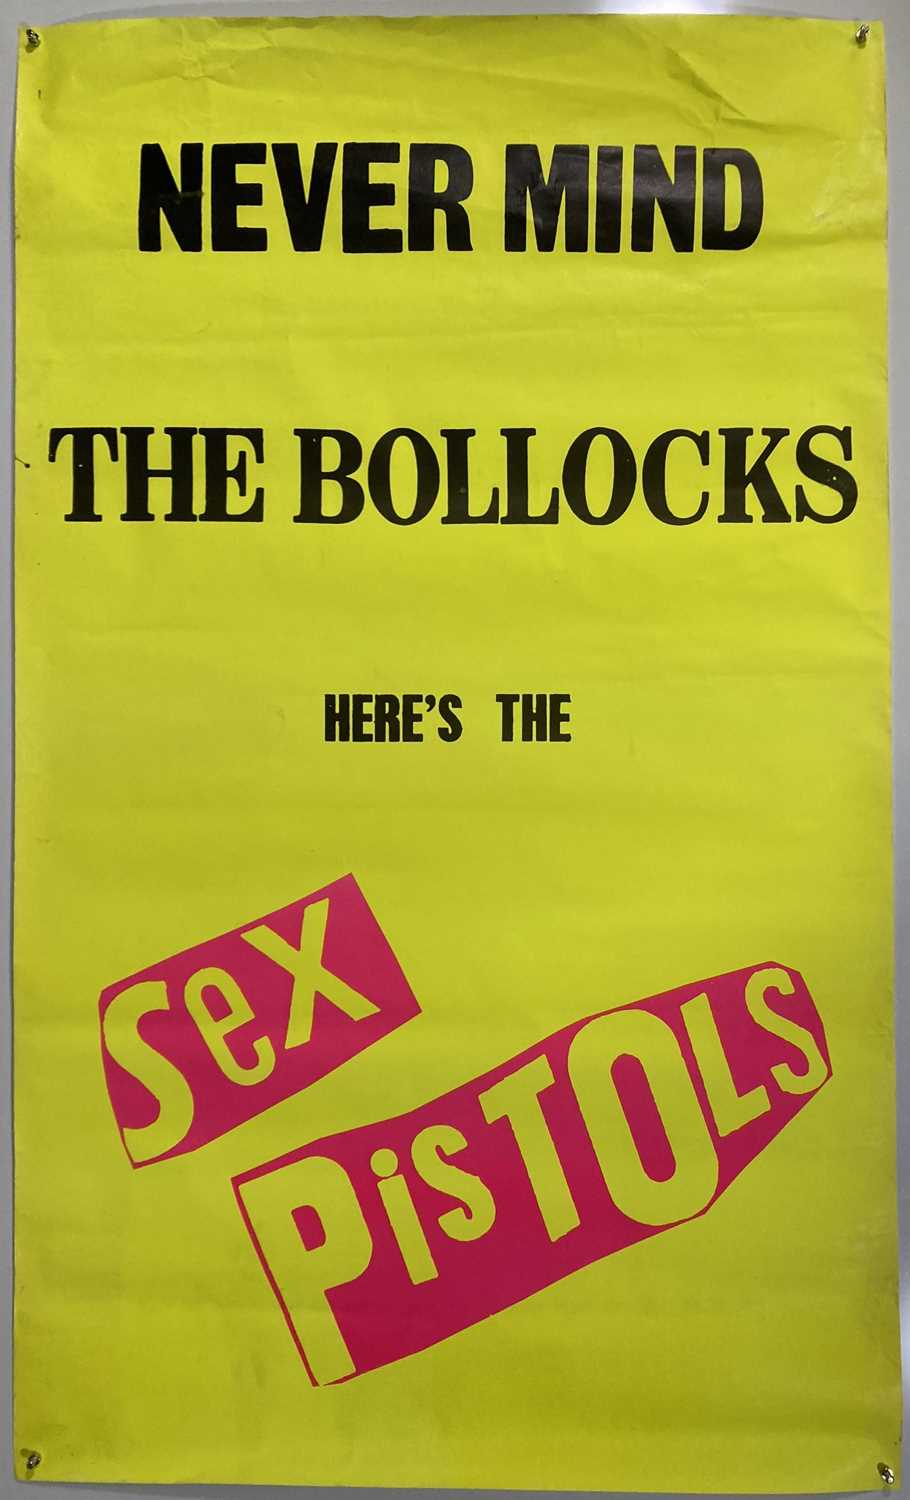 Lot 575 - THE SEX PISTOLS - NEVER MIND THE BOLLOCKS ORIGINAL BILLBOARD POSTER.